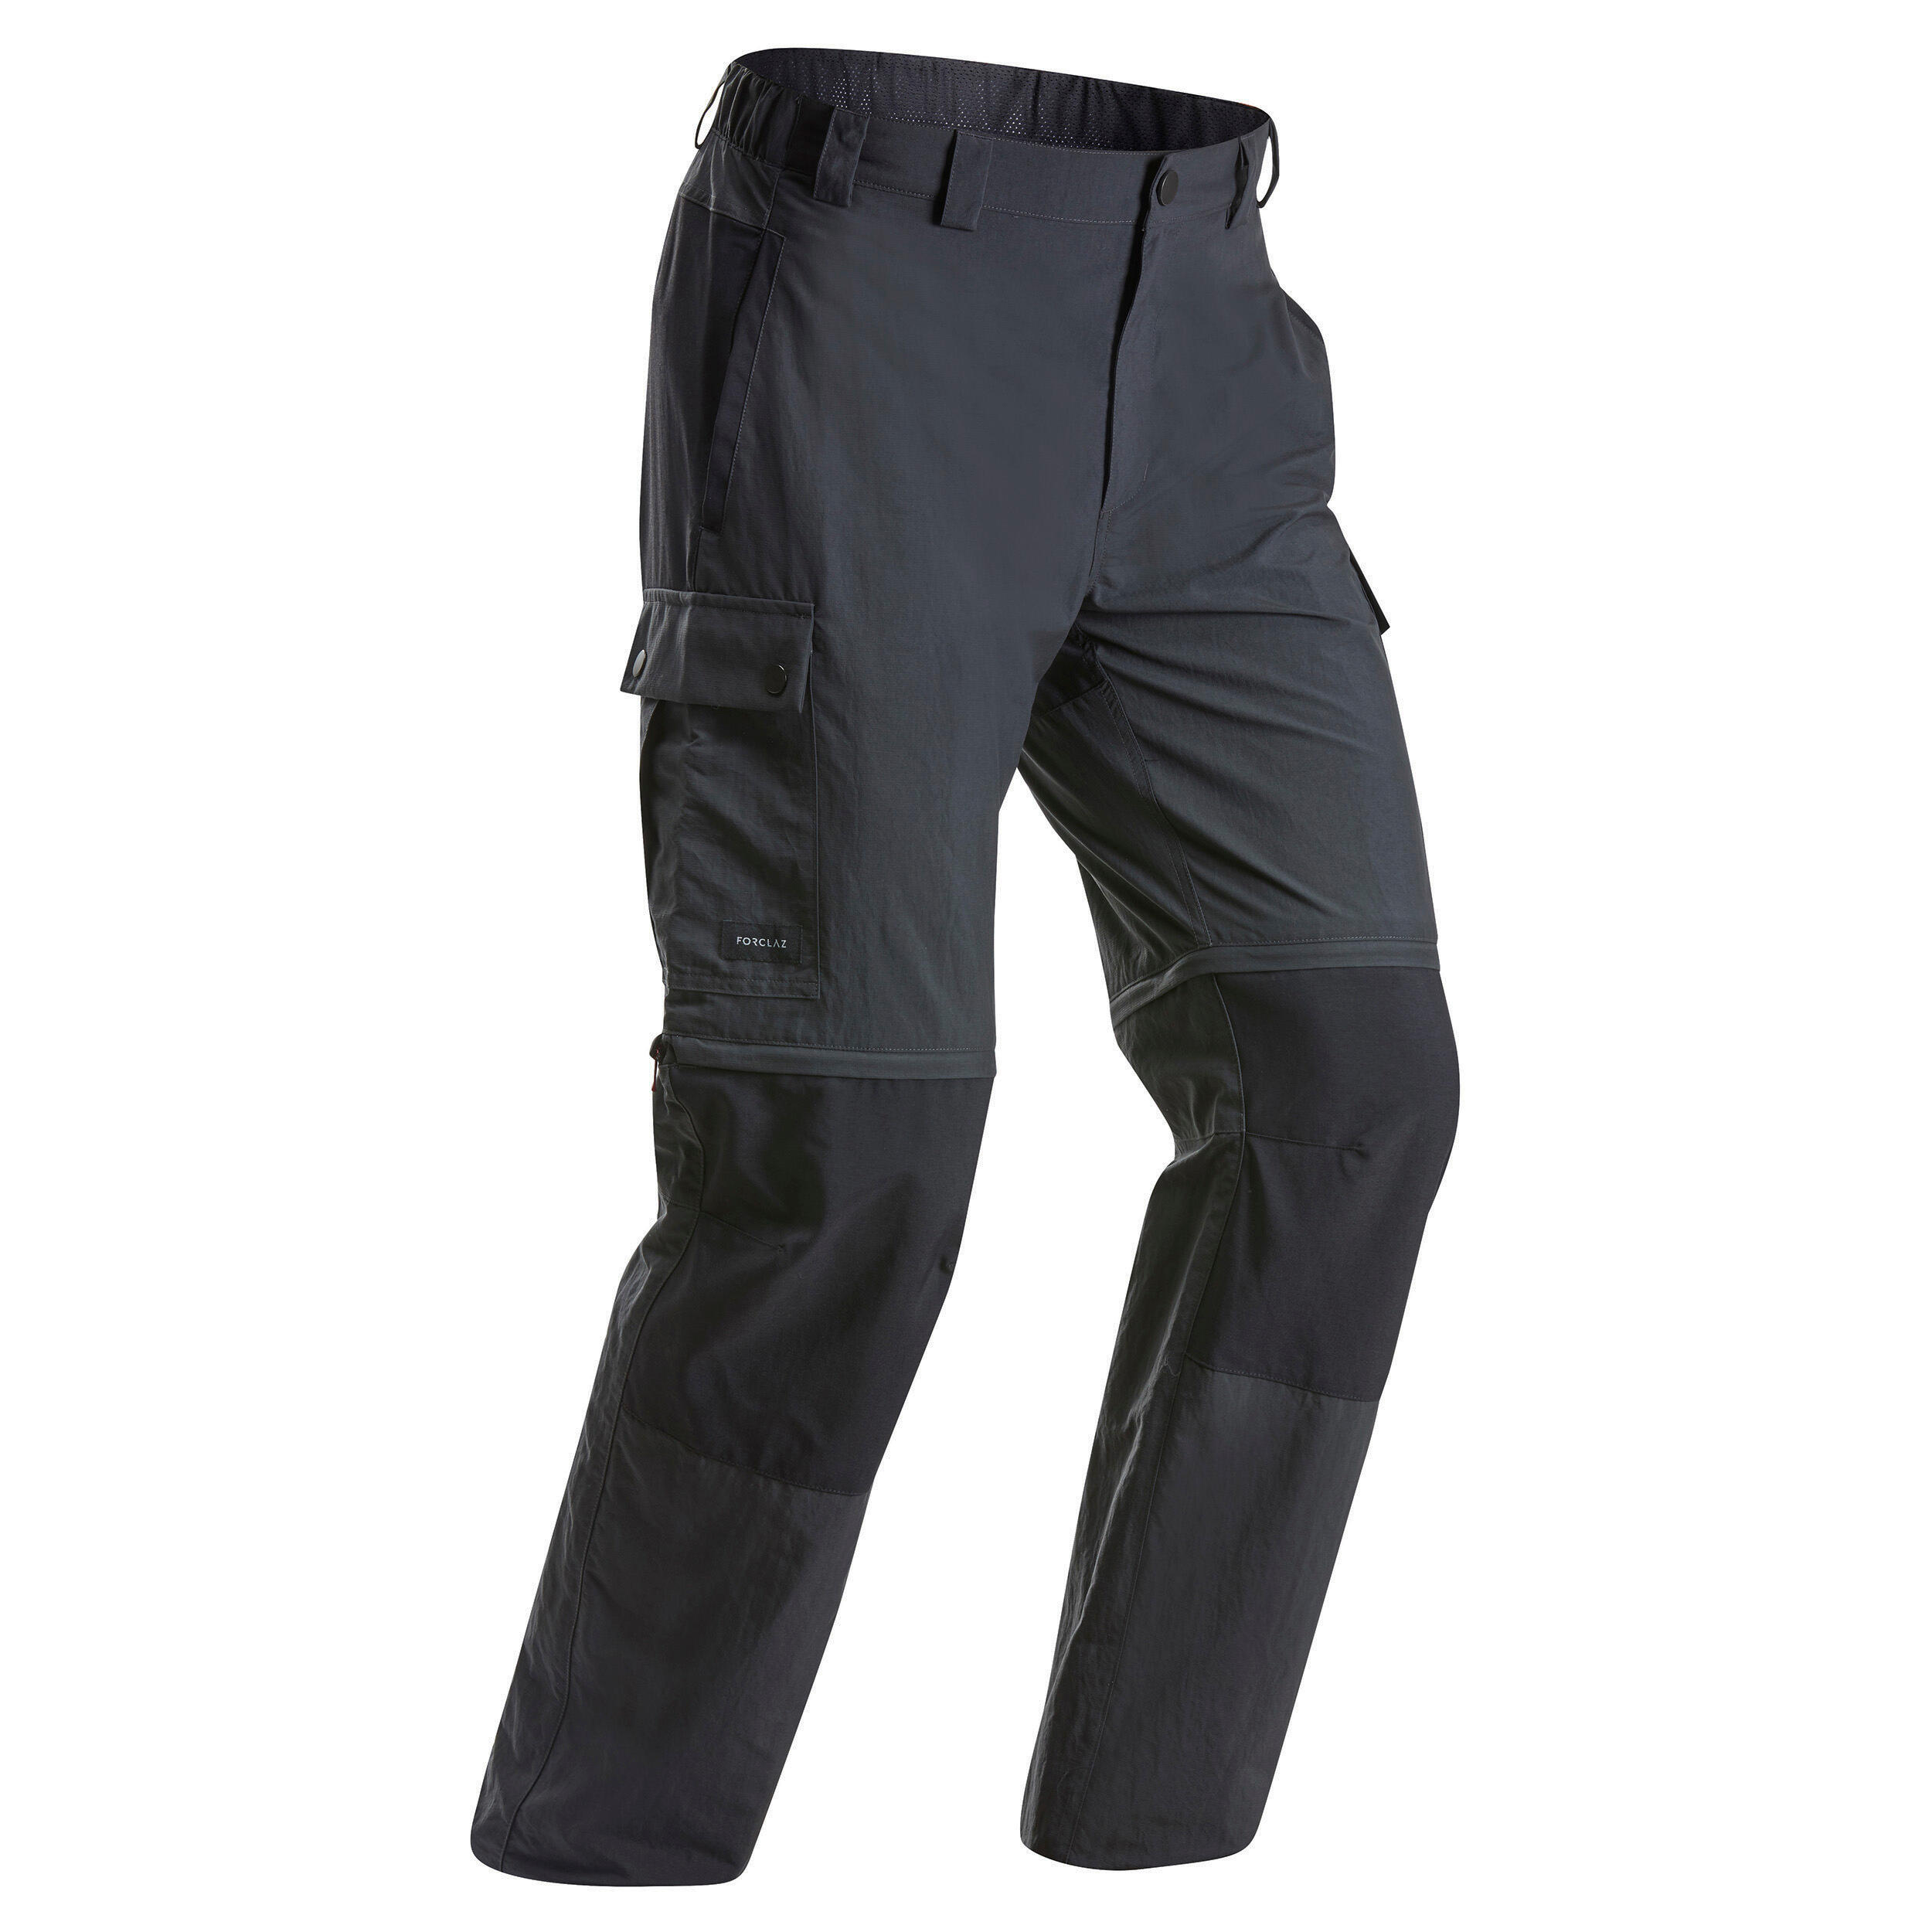 Men’s 2-in-1 Hiking Pants - MT 100 Grey - Carbon grey, Black - Forclaz ...